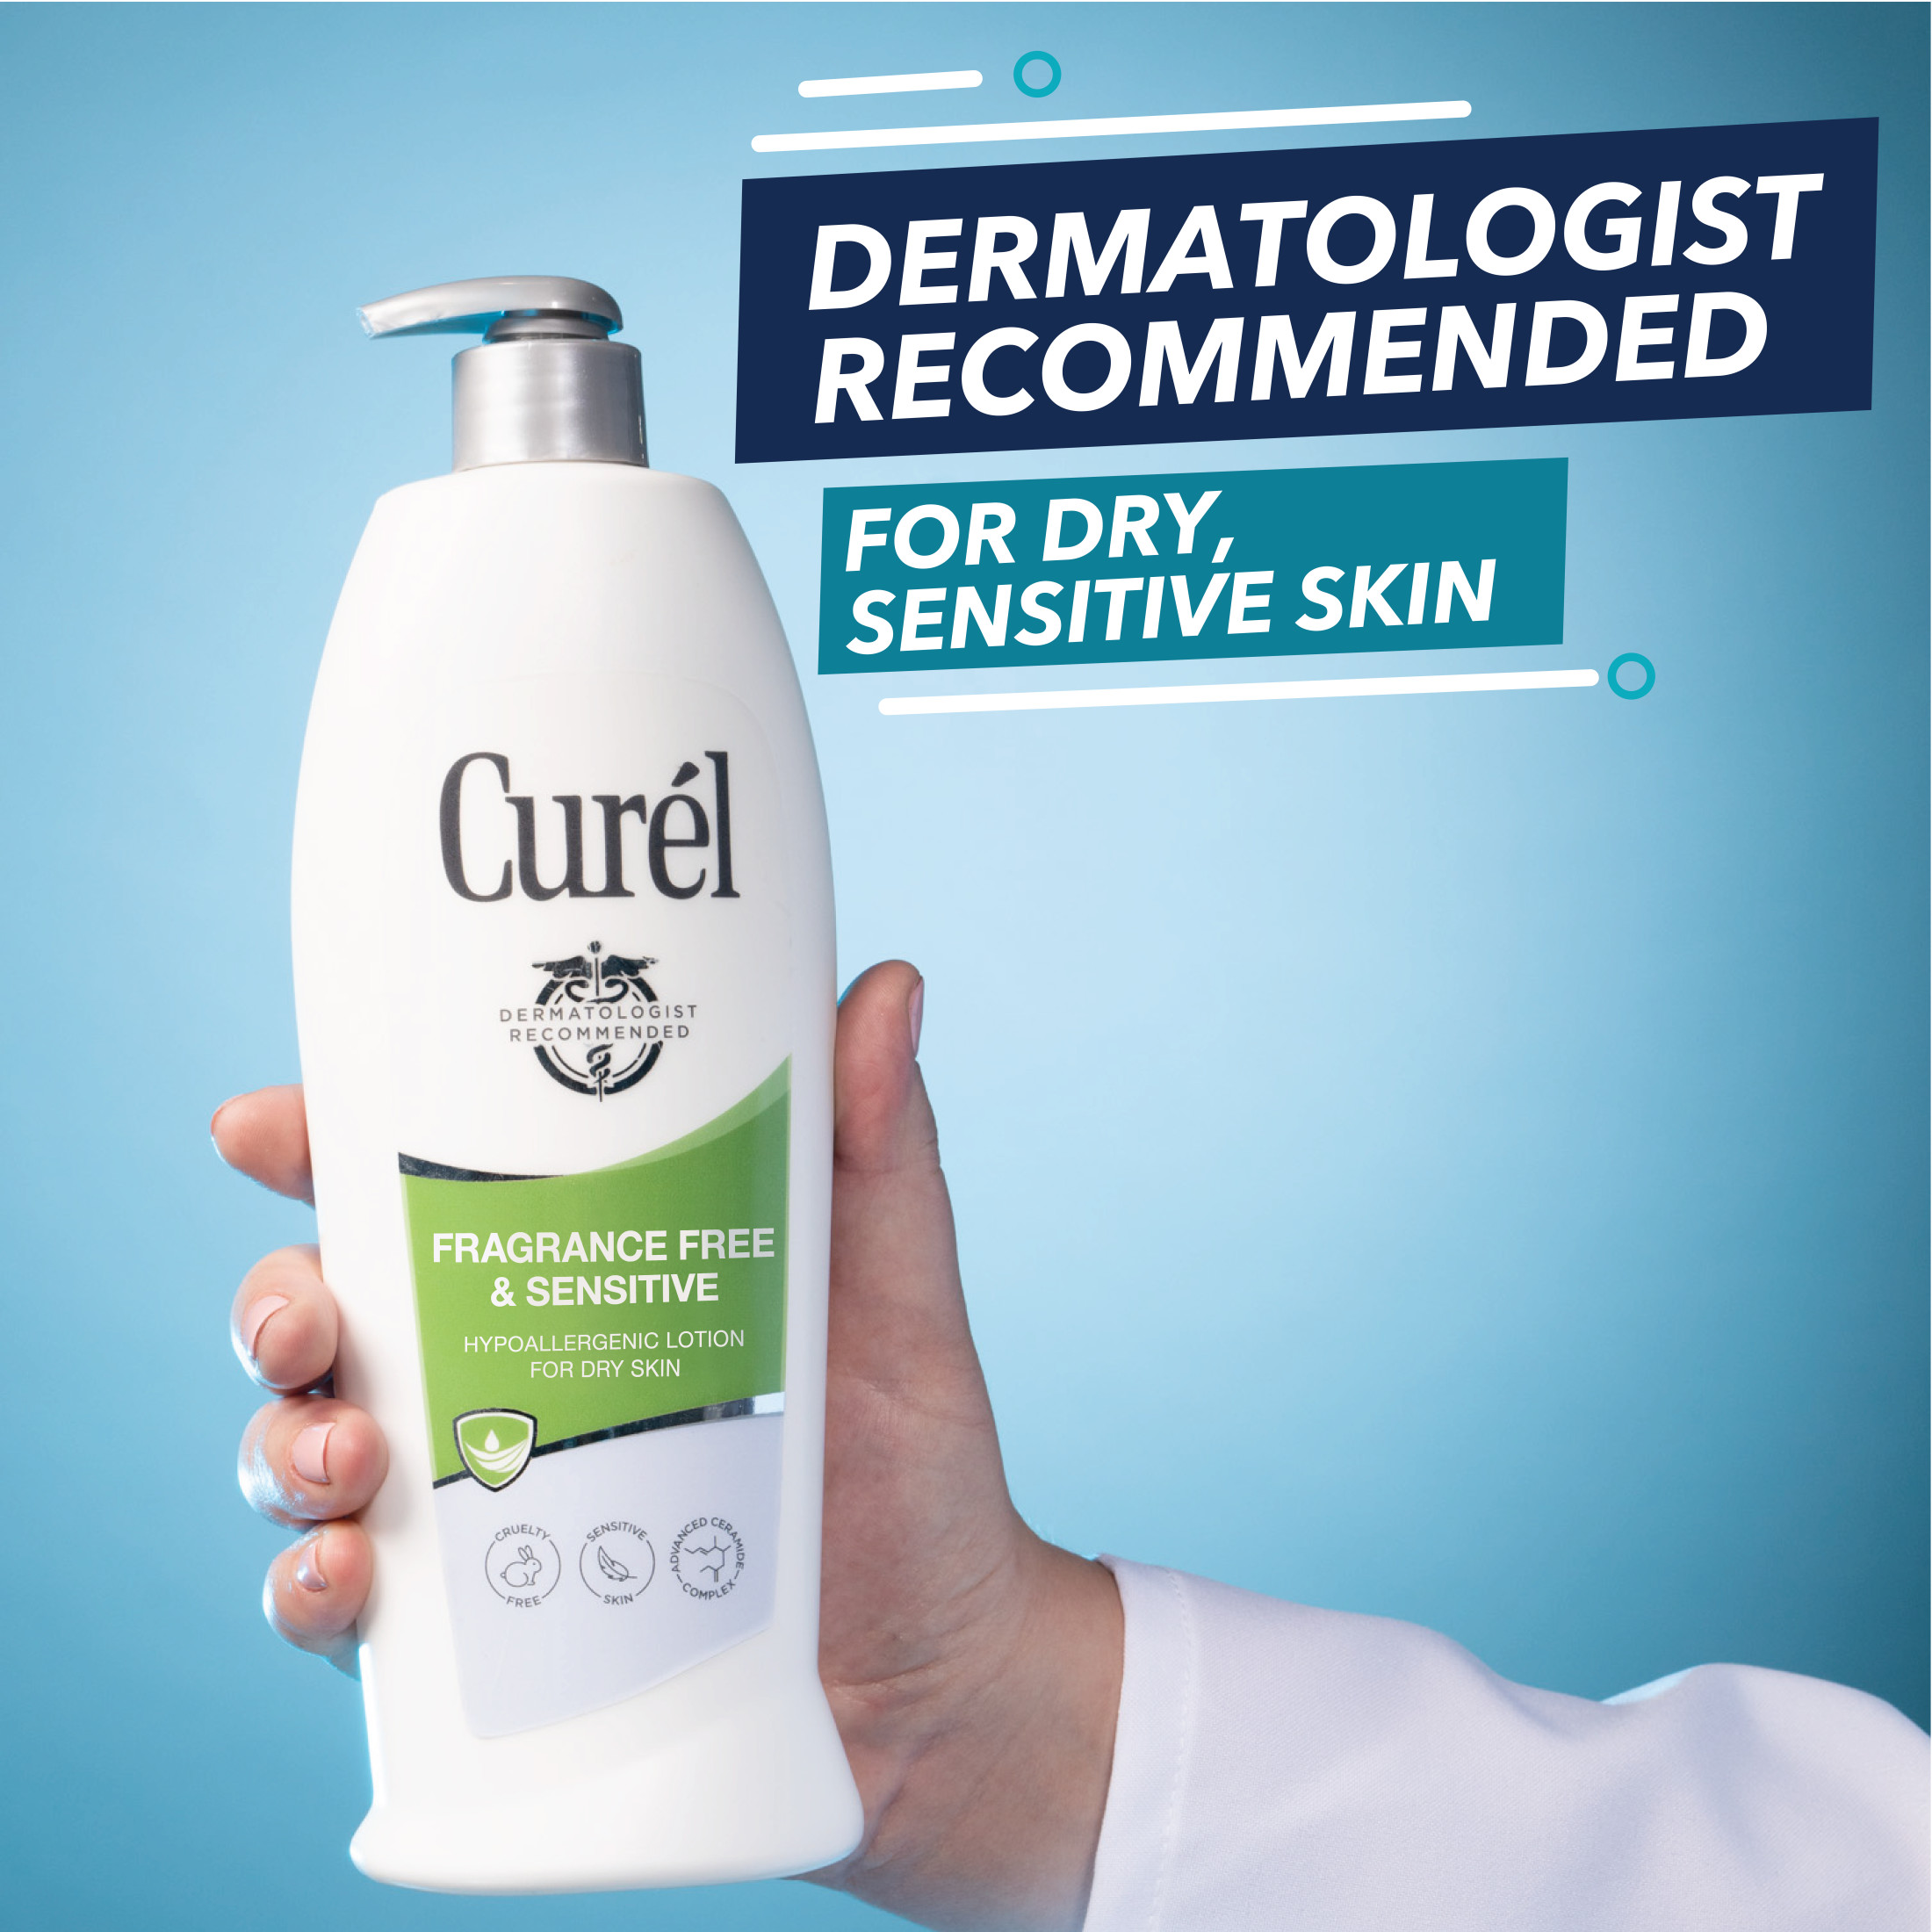 Curel Fragrance Free & Sensitive Lotion, Sensitive Skin Lotion for Dry Skin, Dermatologist Recommended, 20 Oz - image 2 of 9